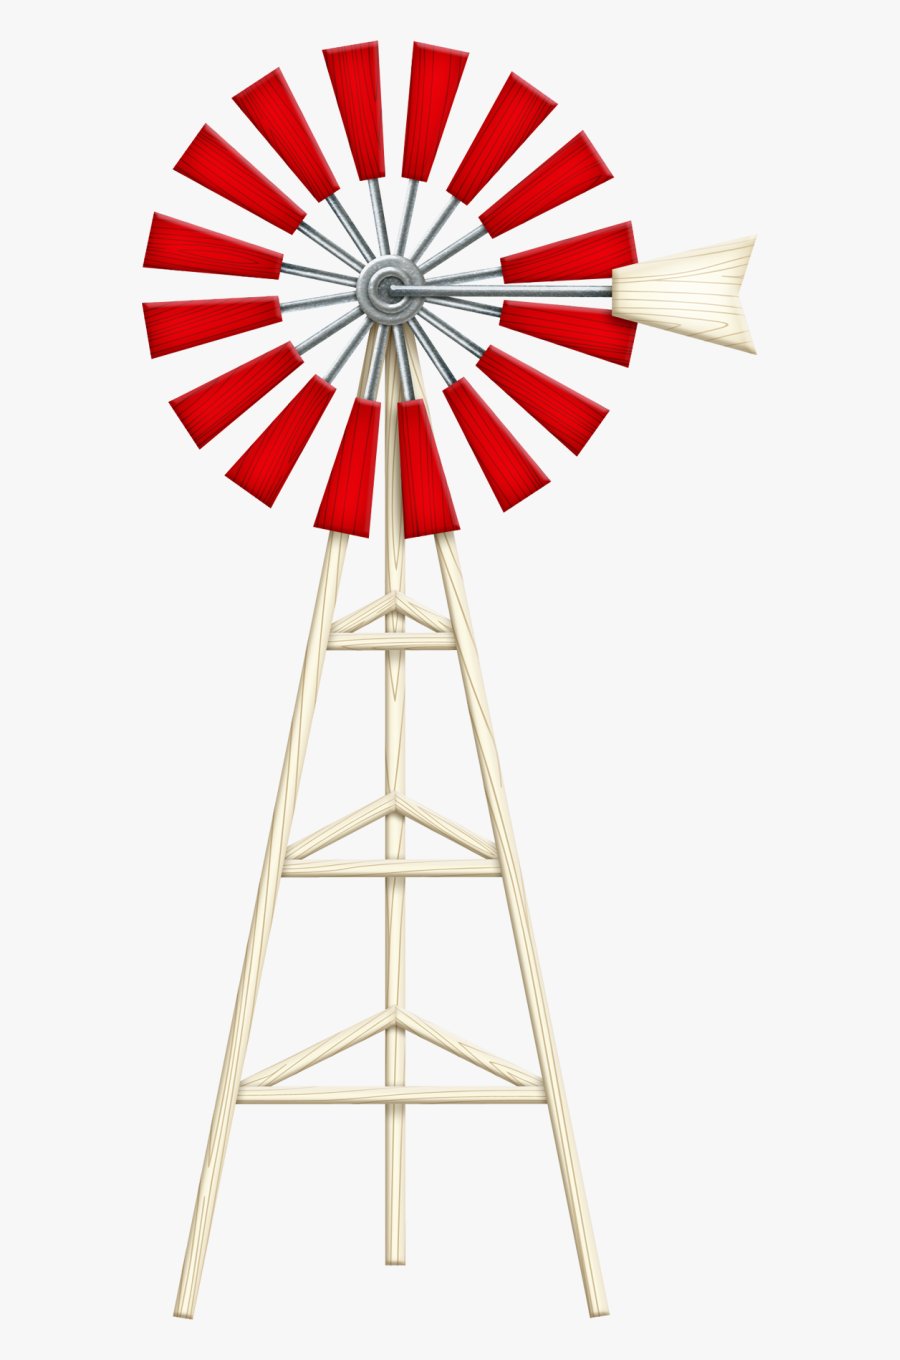 Farm Windmill Clipart, Transparent Clipart